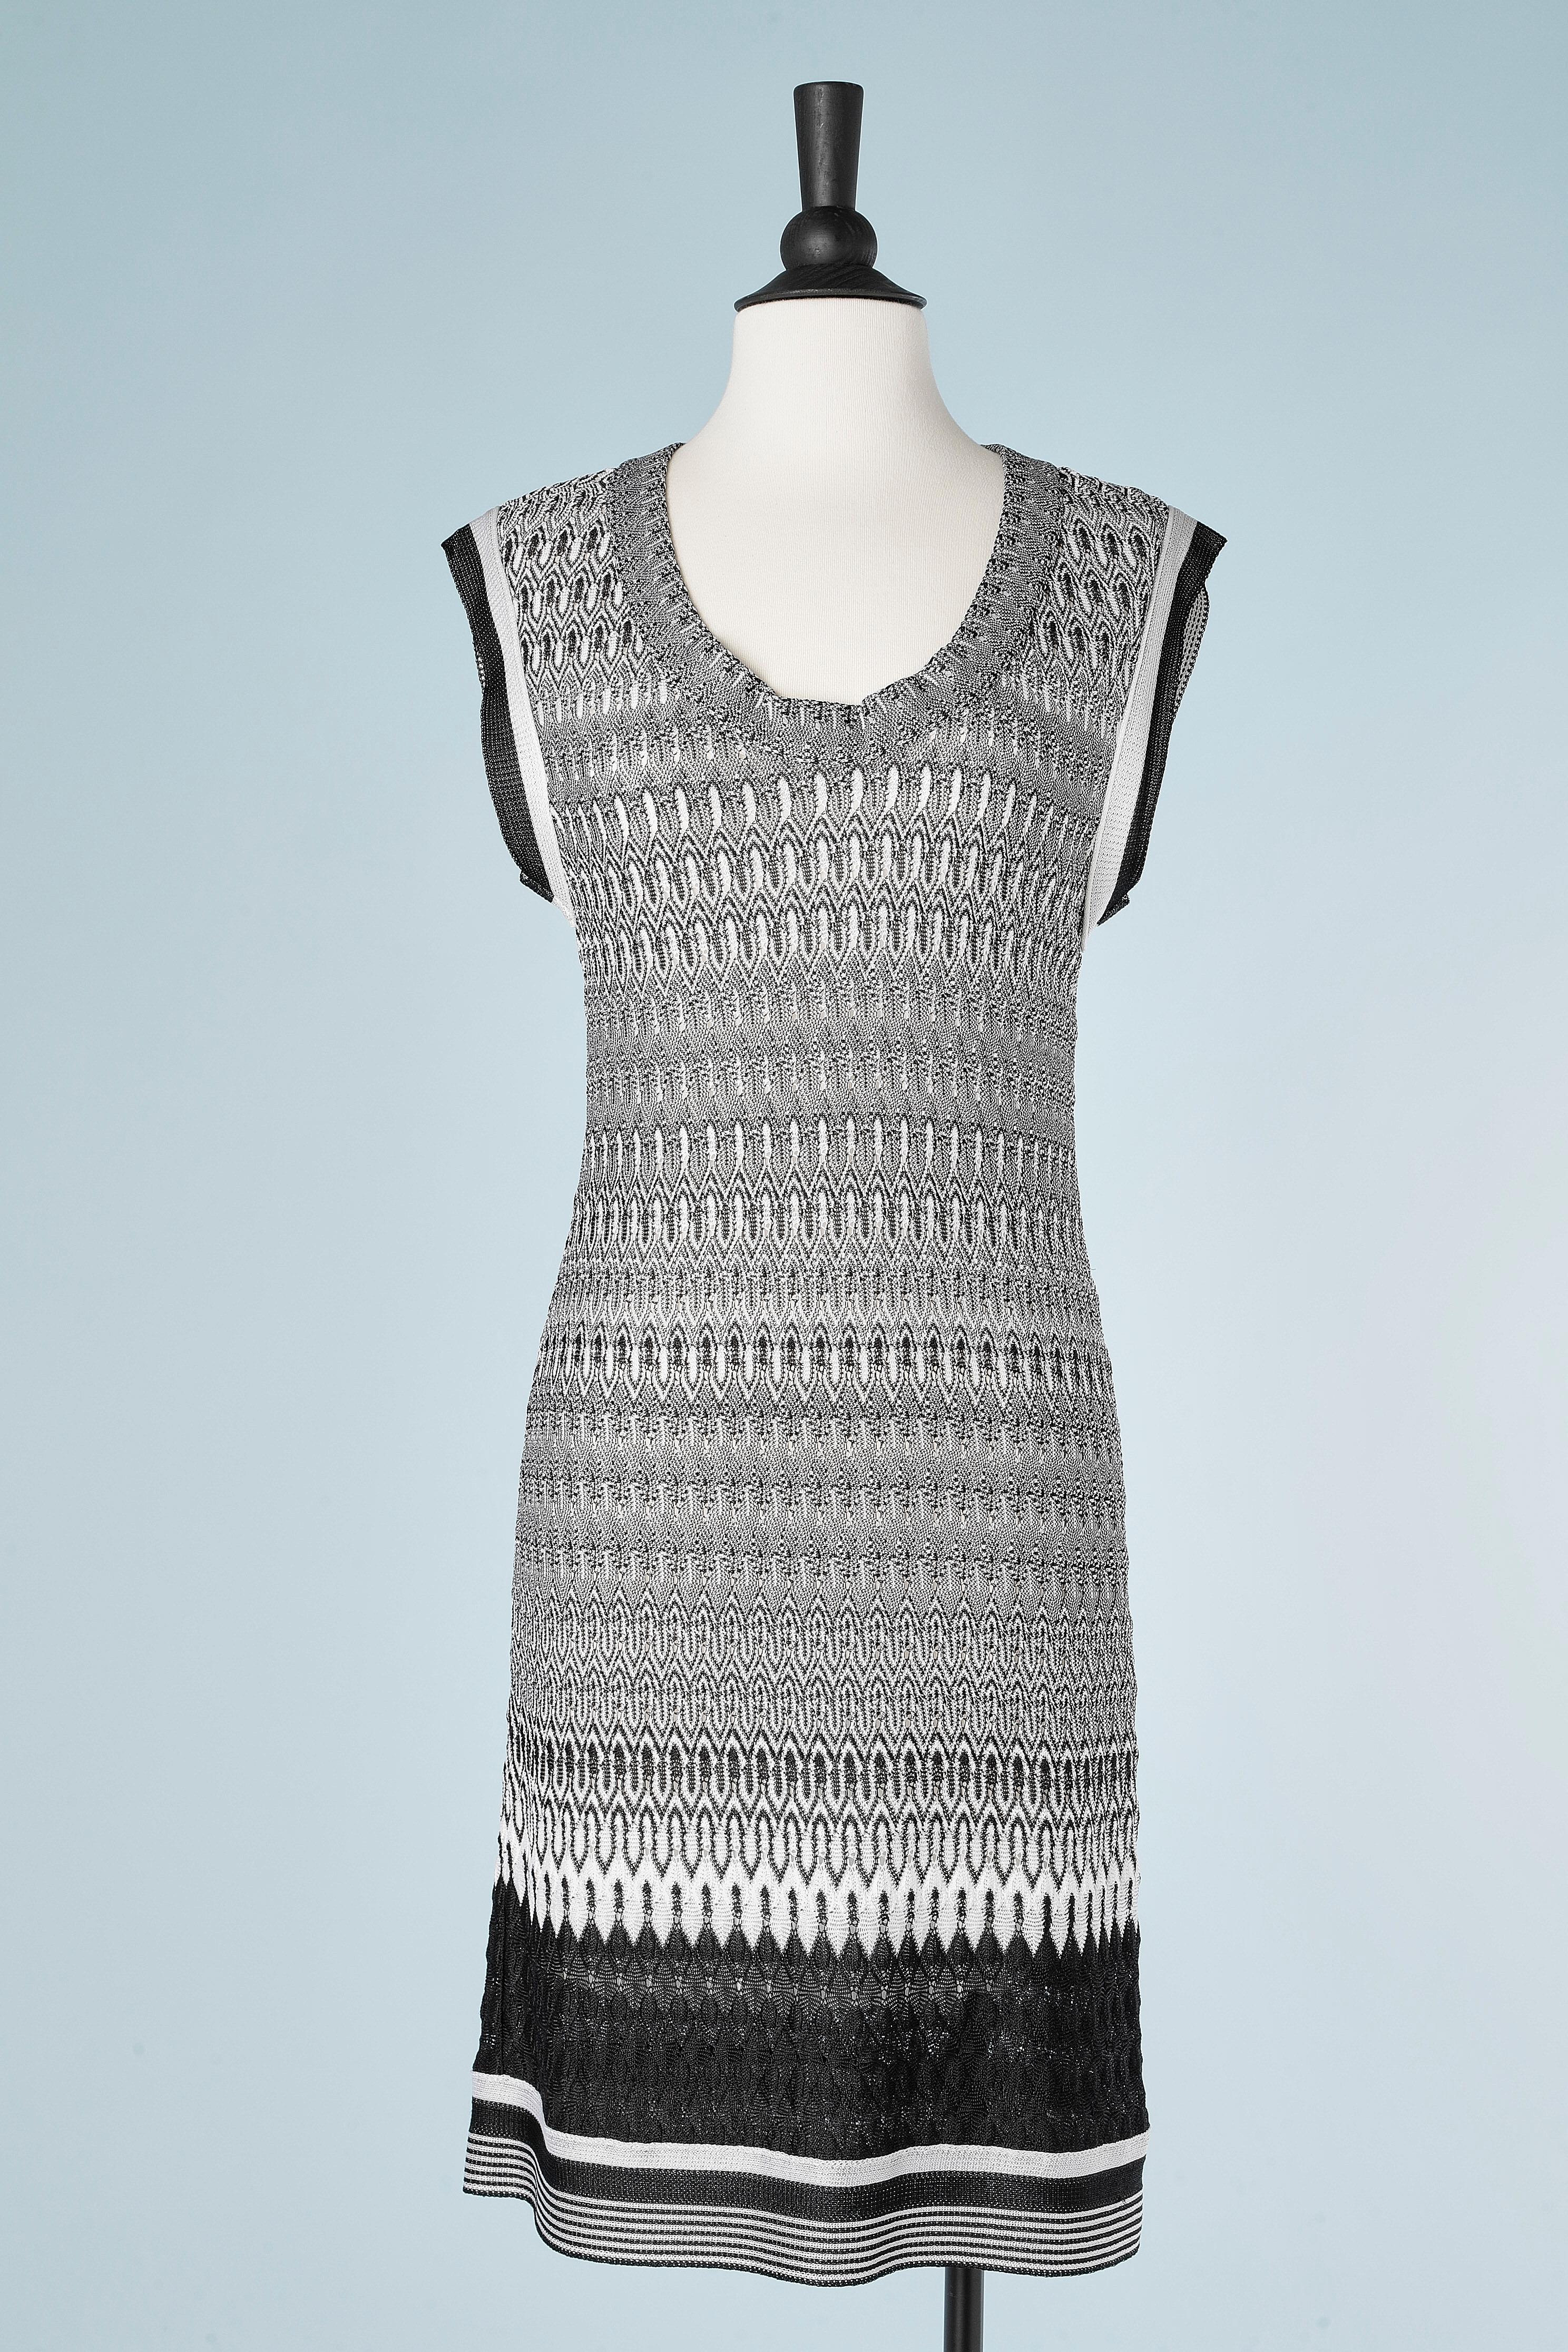 Black&white rayon jacquard knit sleeveless dress and cardigan ensemble Missoni  For Sale 2